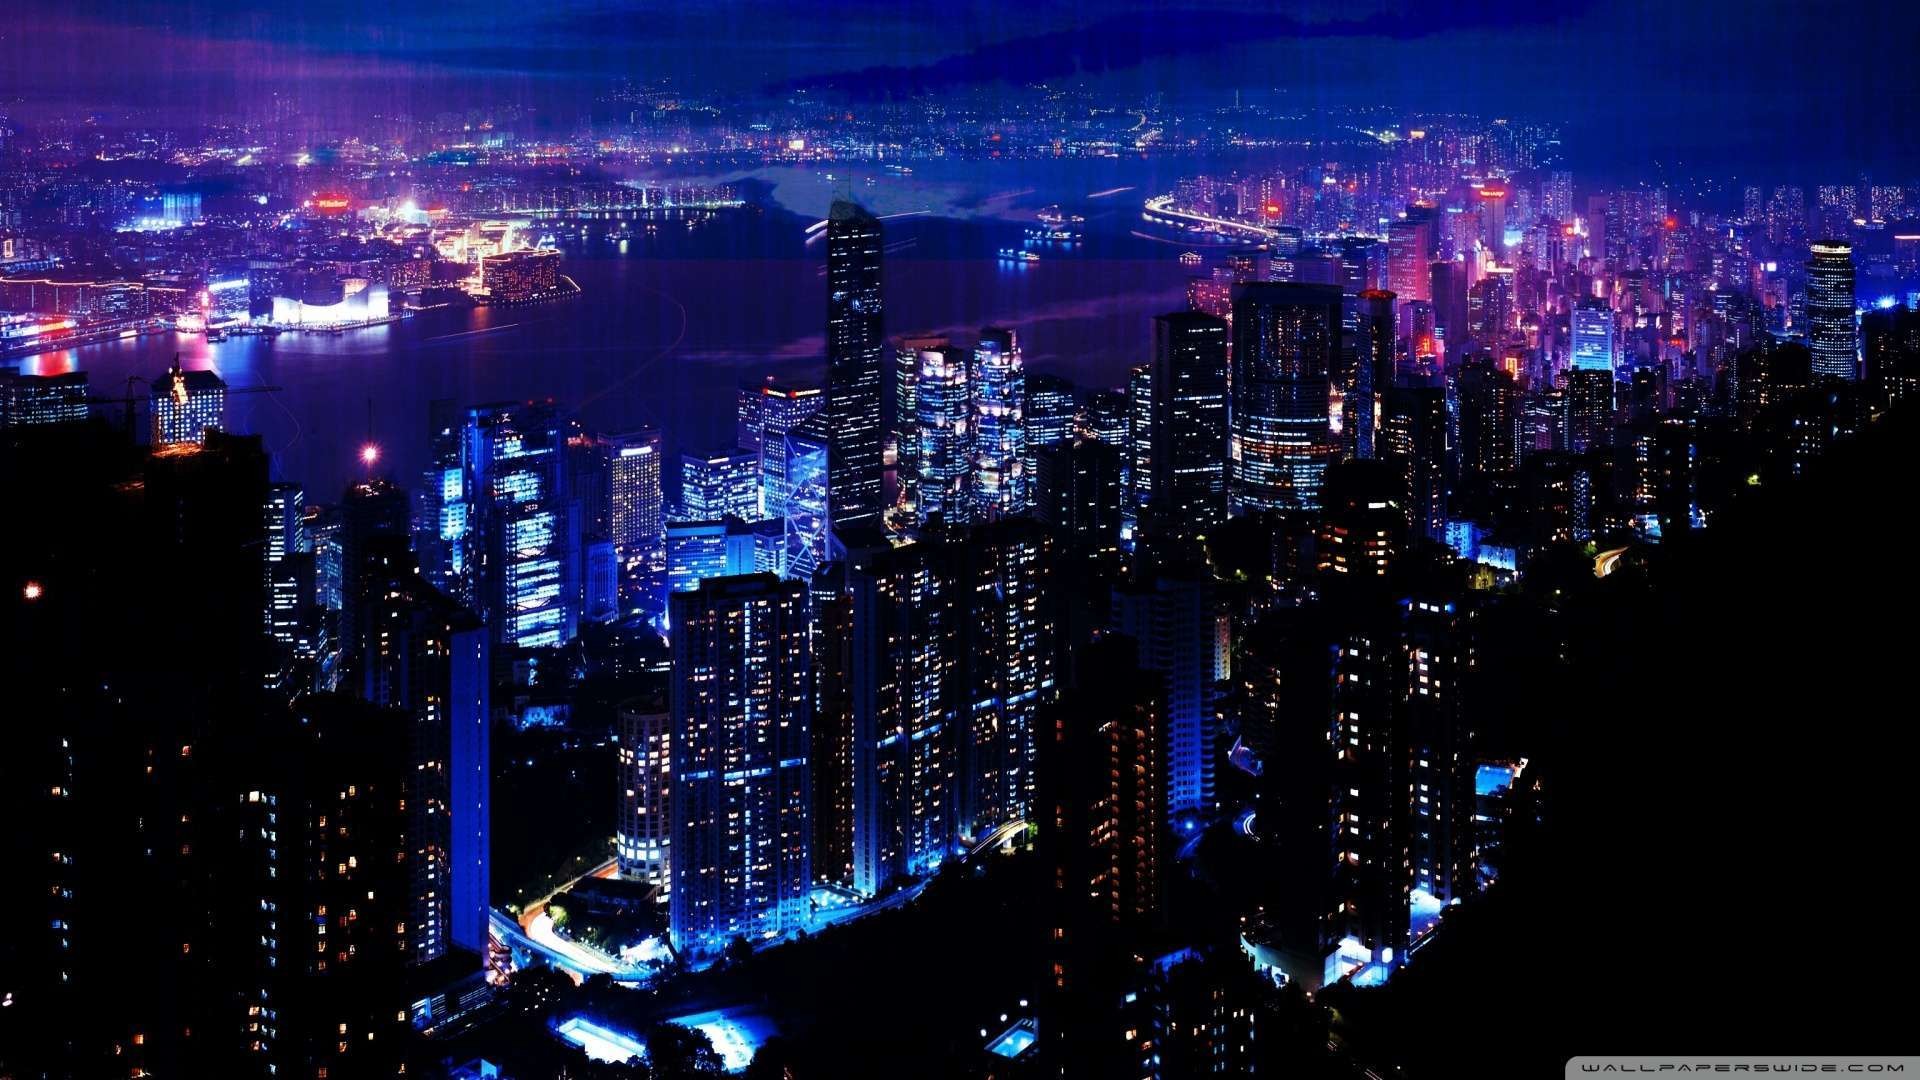 1920x1080 Wallpaper: Night City 2 Wallpaper 1080p HD. Upload at January 4, 2014 .